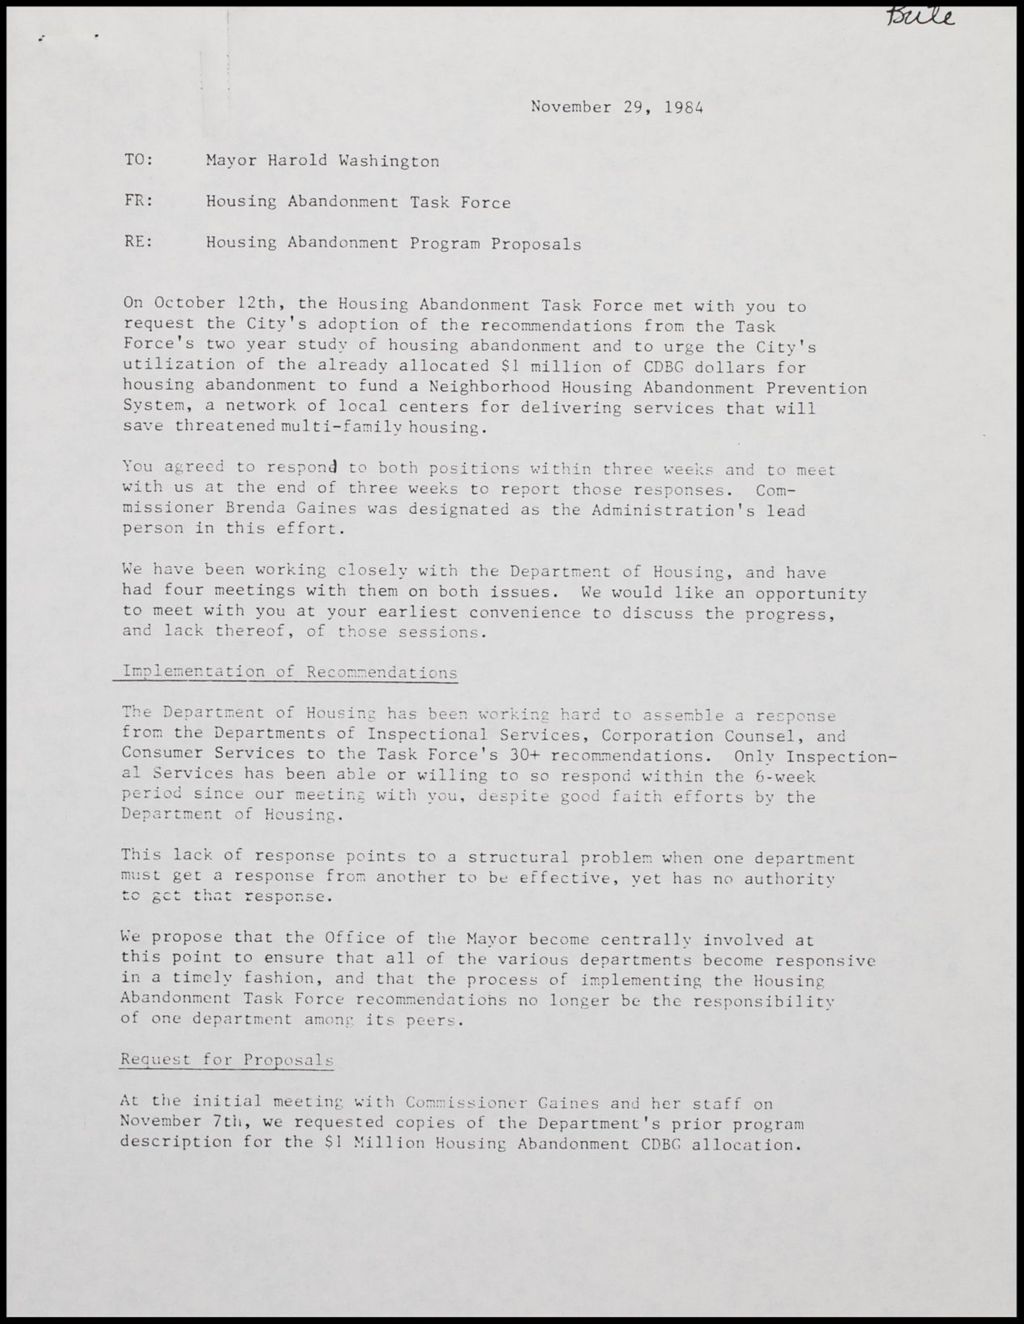 Miniature of Housing Abandonment Task Force - Memos to Mayor Washington, 1984 (Folder II-1791)